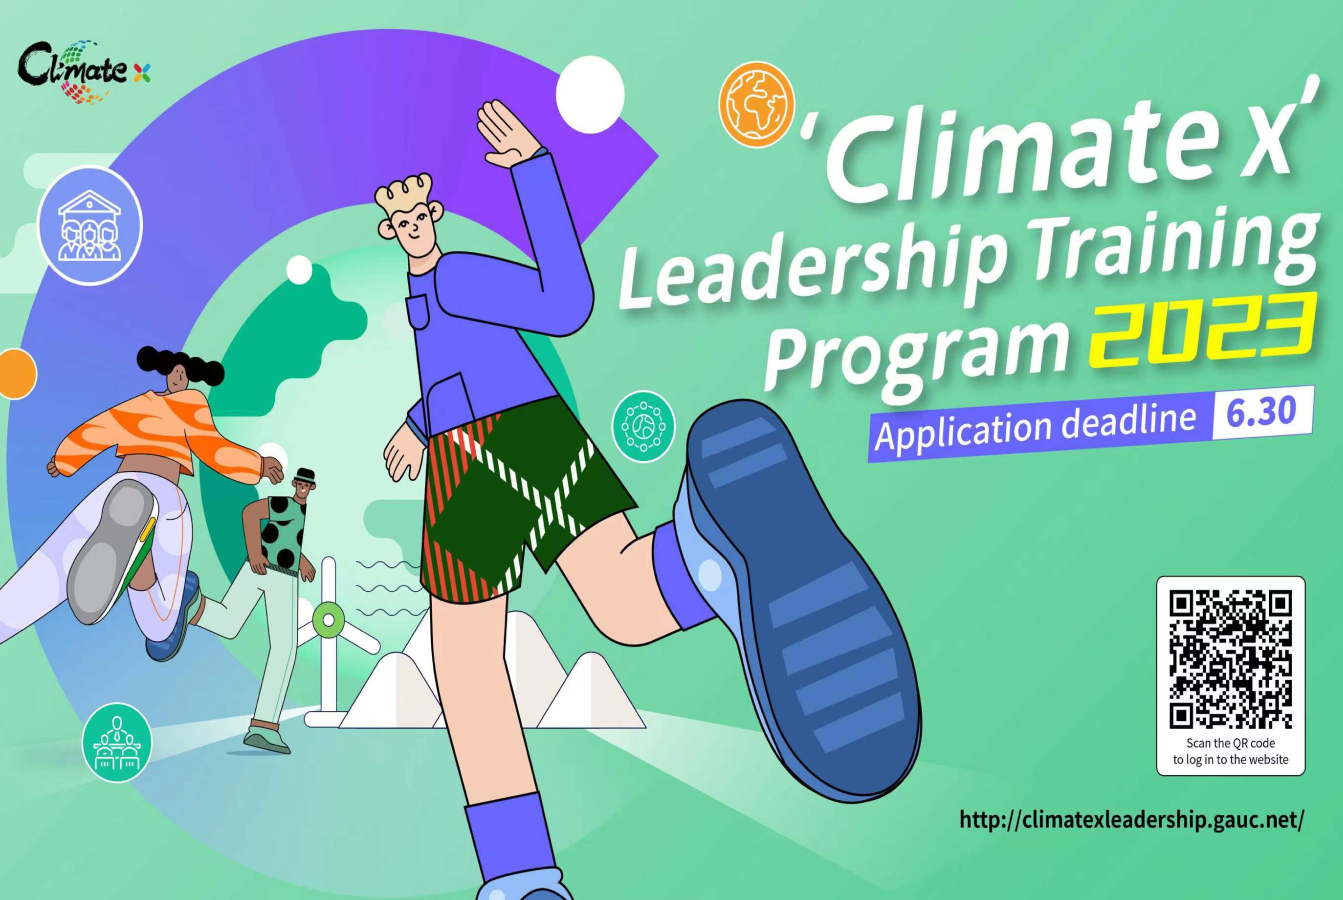 ‘Climate x' Leadership Training Program 2023